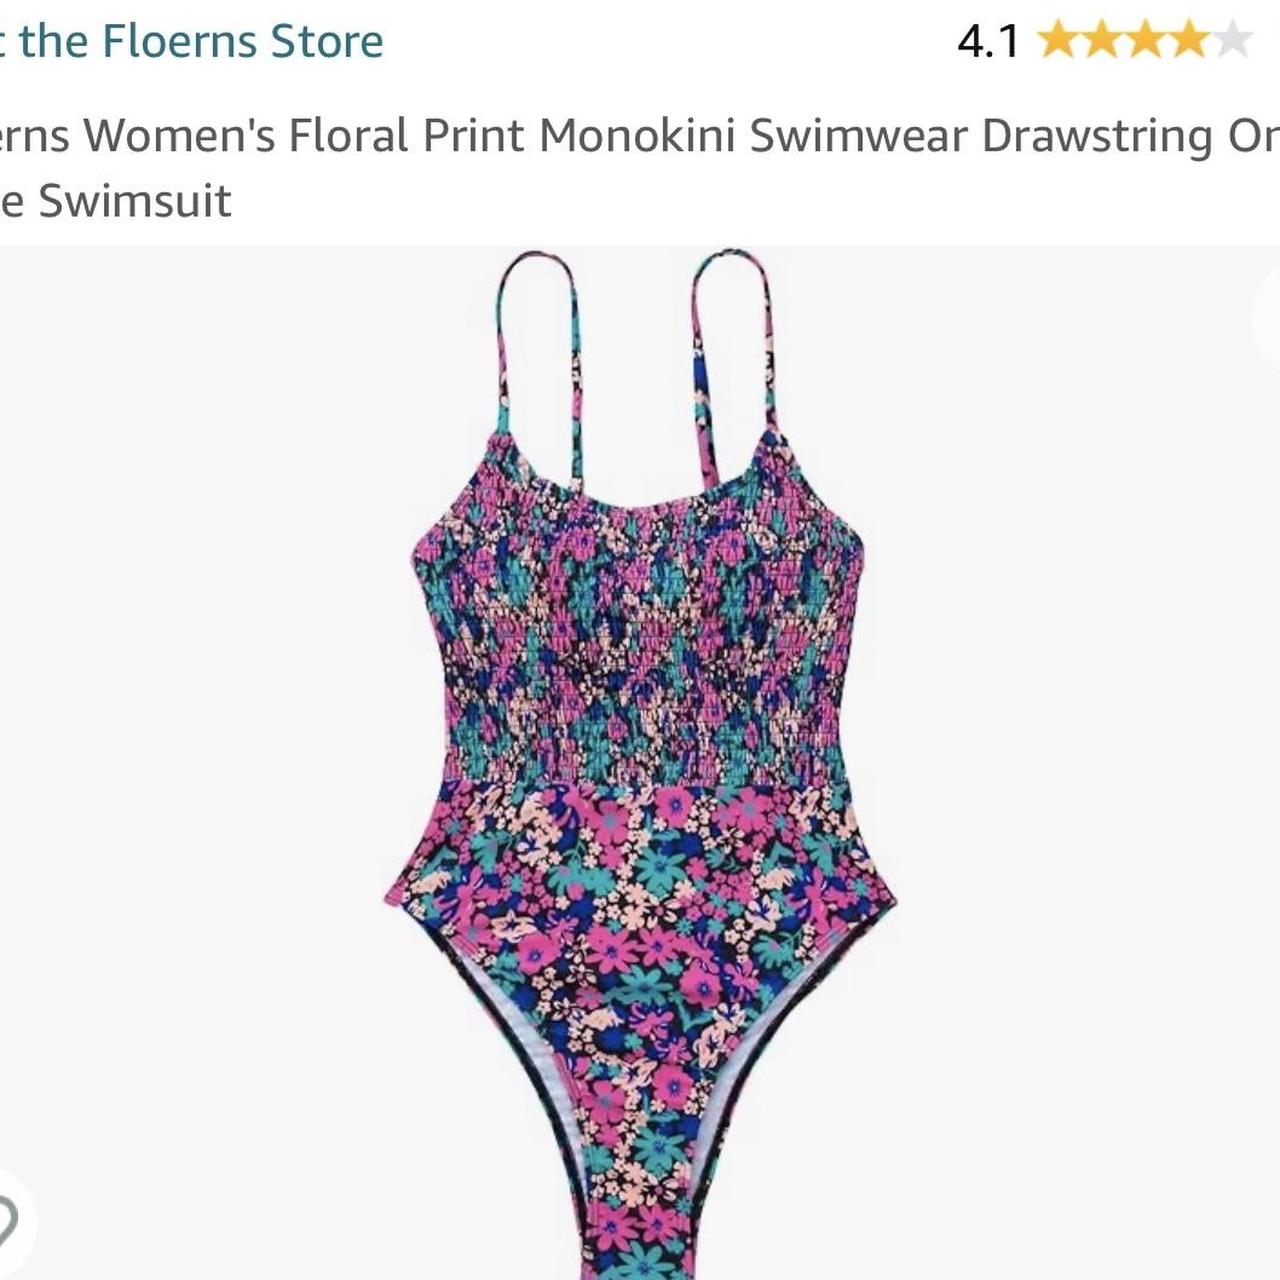 Floerns Women's Floral Print Monokini Swimwear Drawstring One Piece Swimsuit